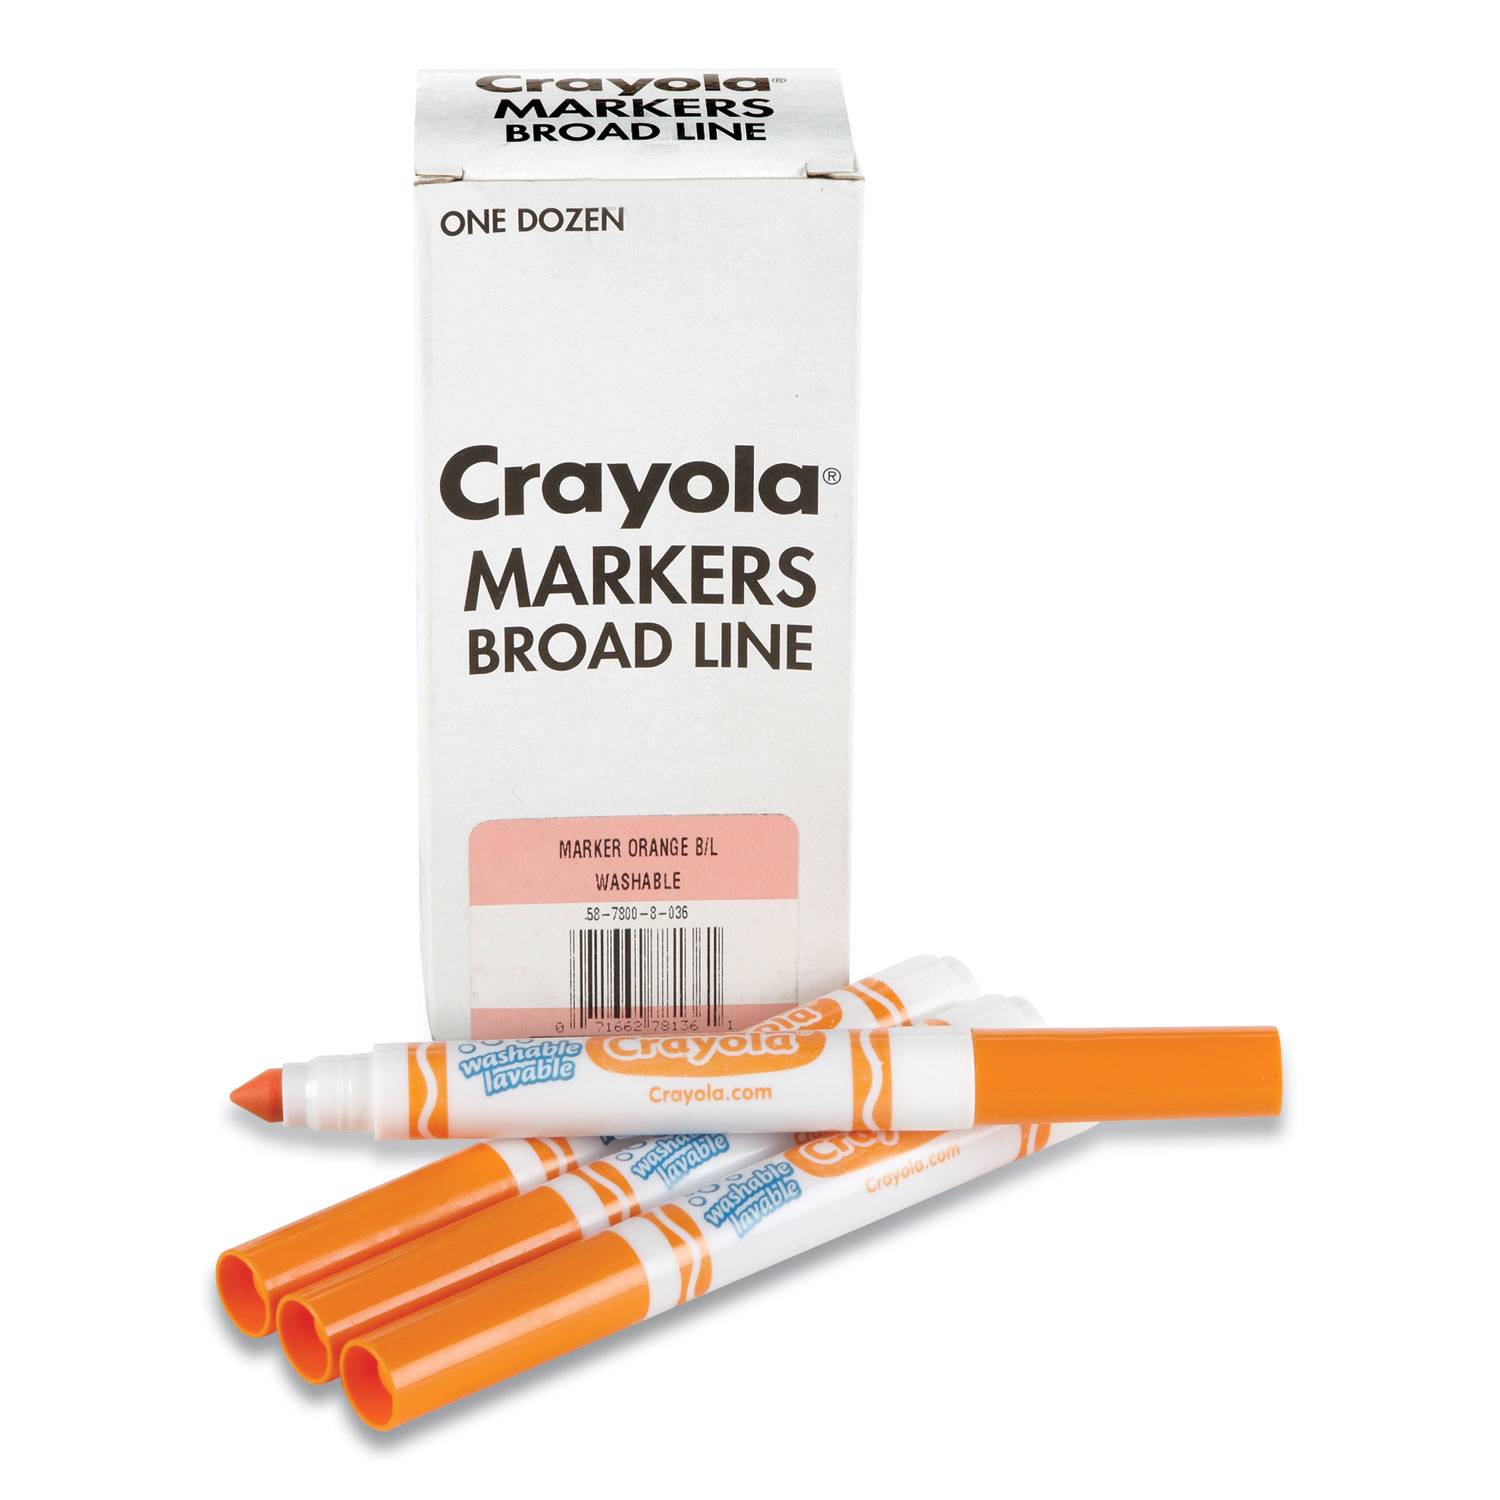 Crayola Broad Line Markers Classpack, 256 Count, crayola.com